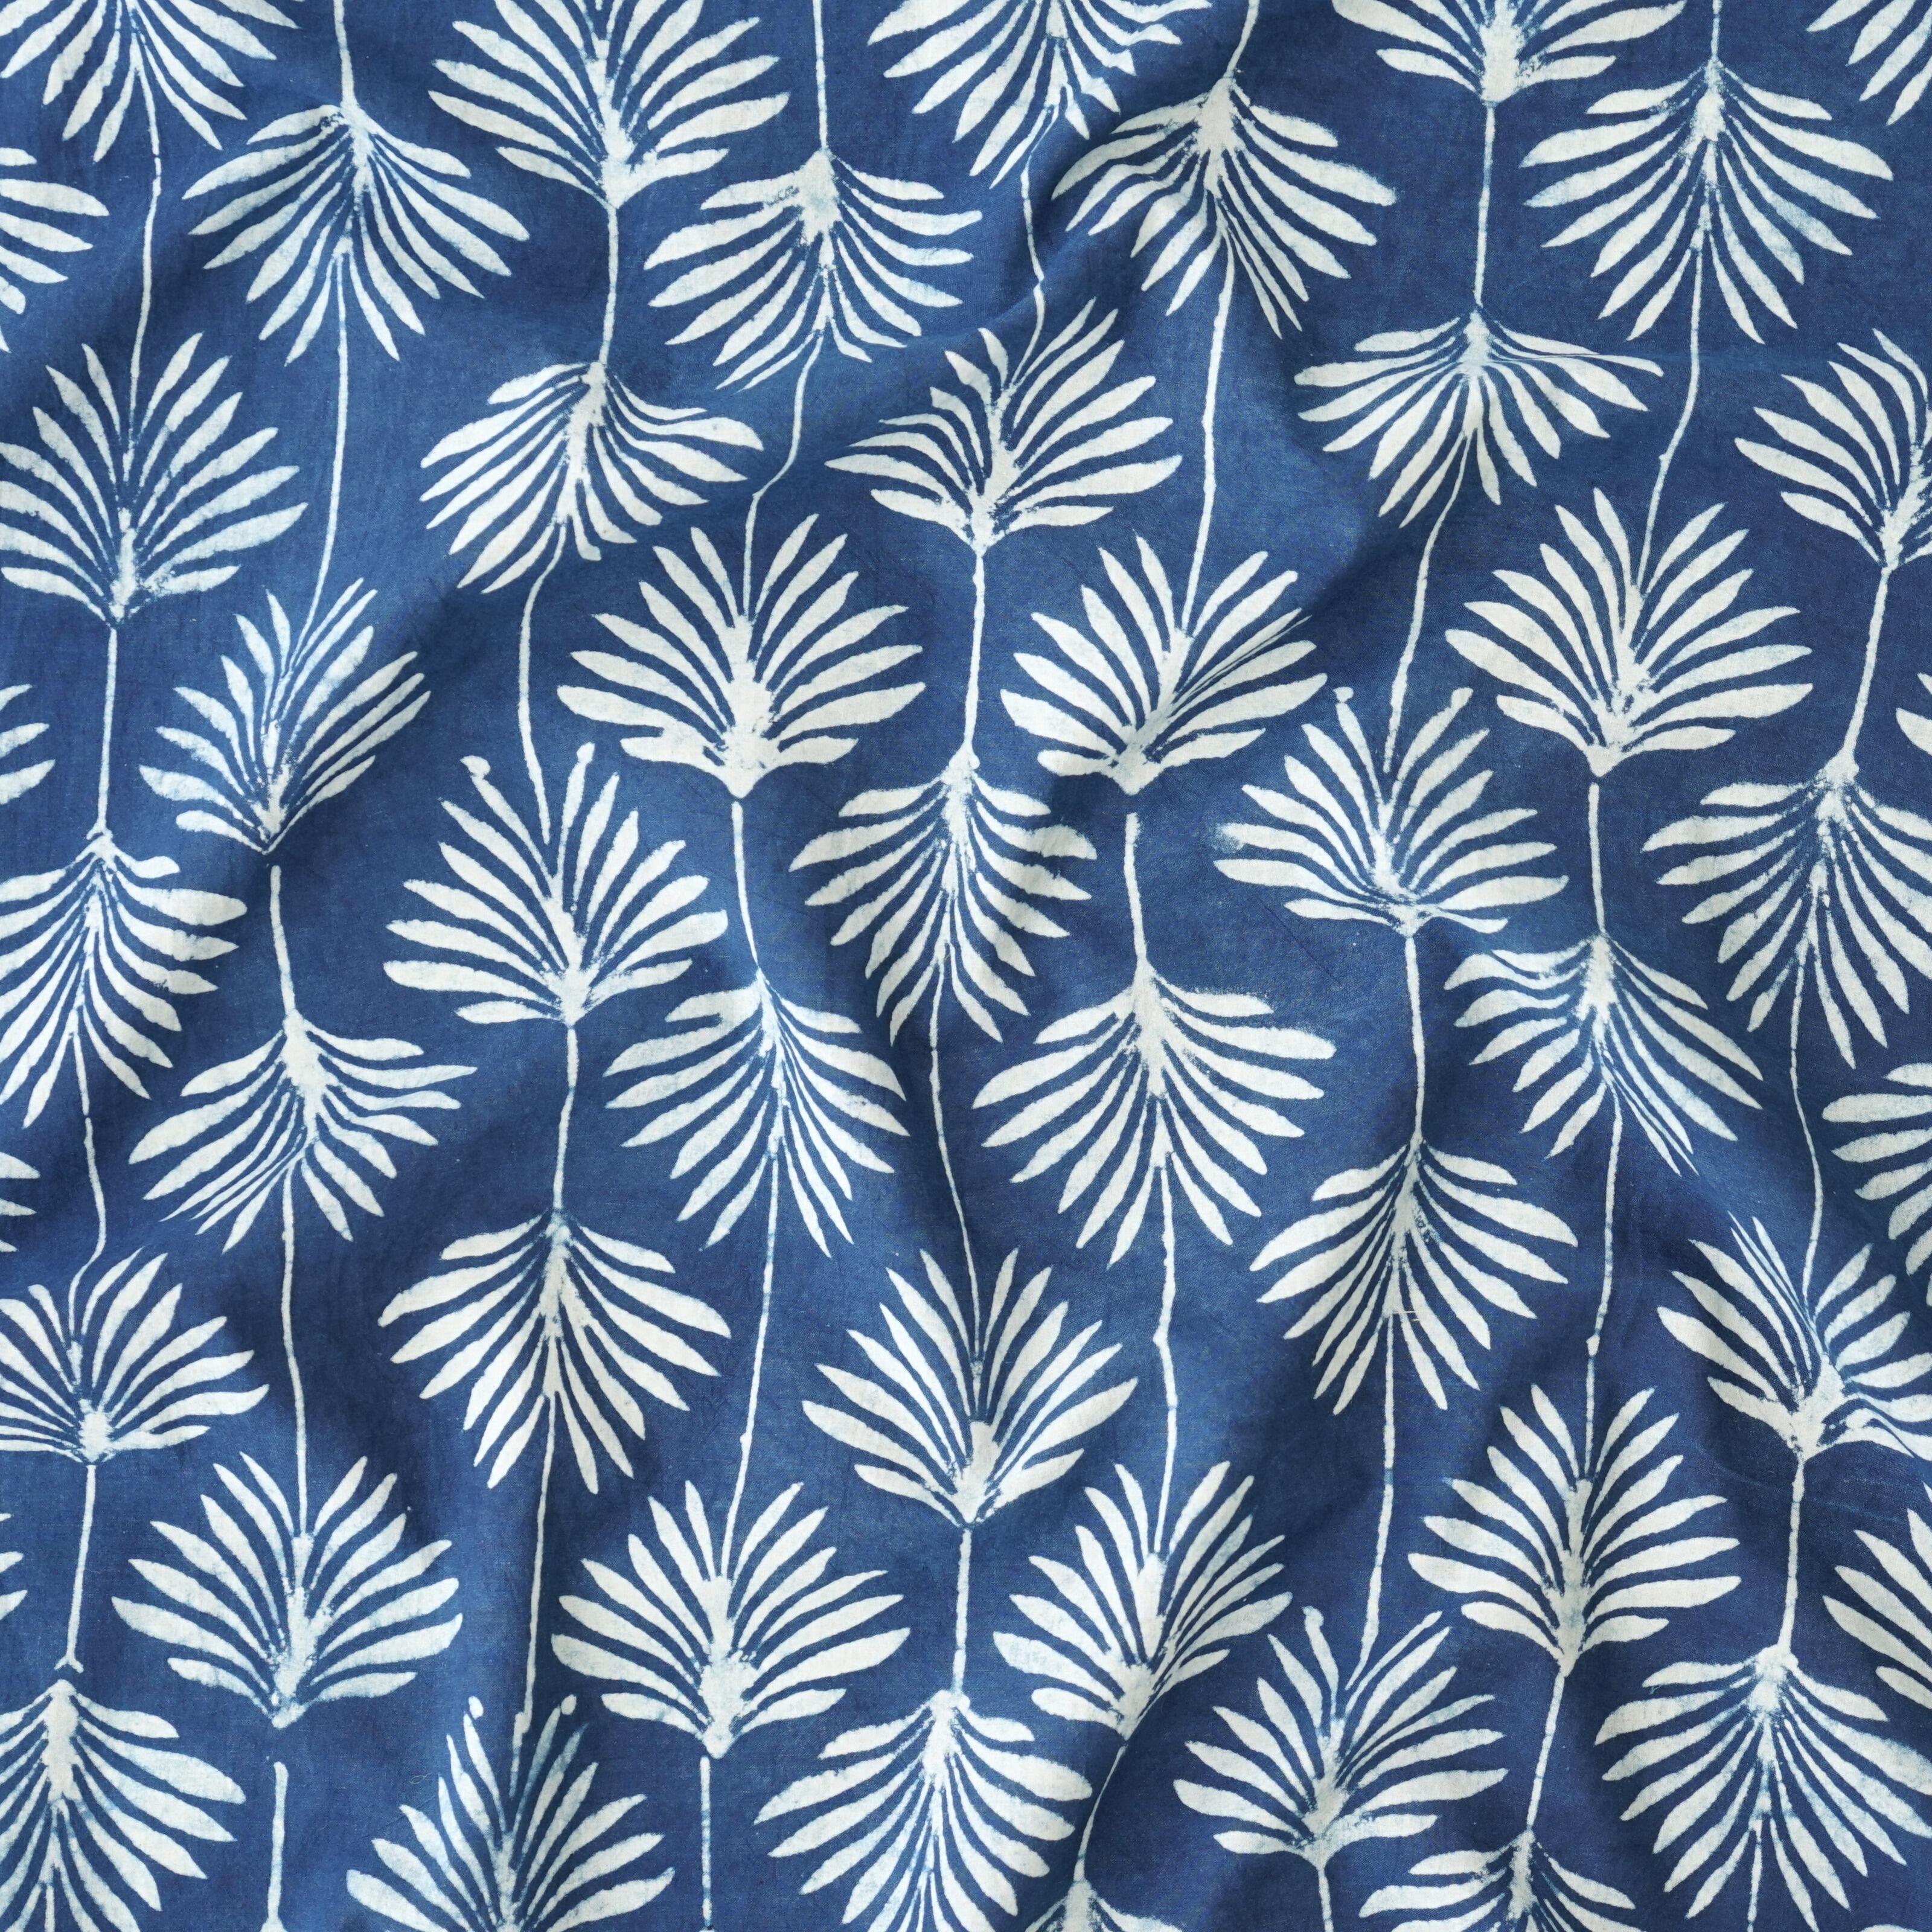 SIK15 - Indian Woodblock-Printed Cotton Fabric - Palm Leaf Design - Indigo Dye - Contrast